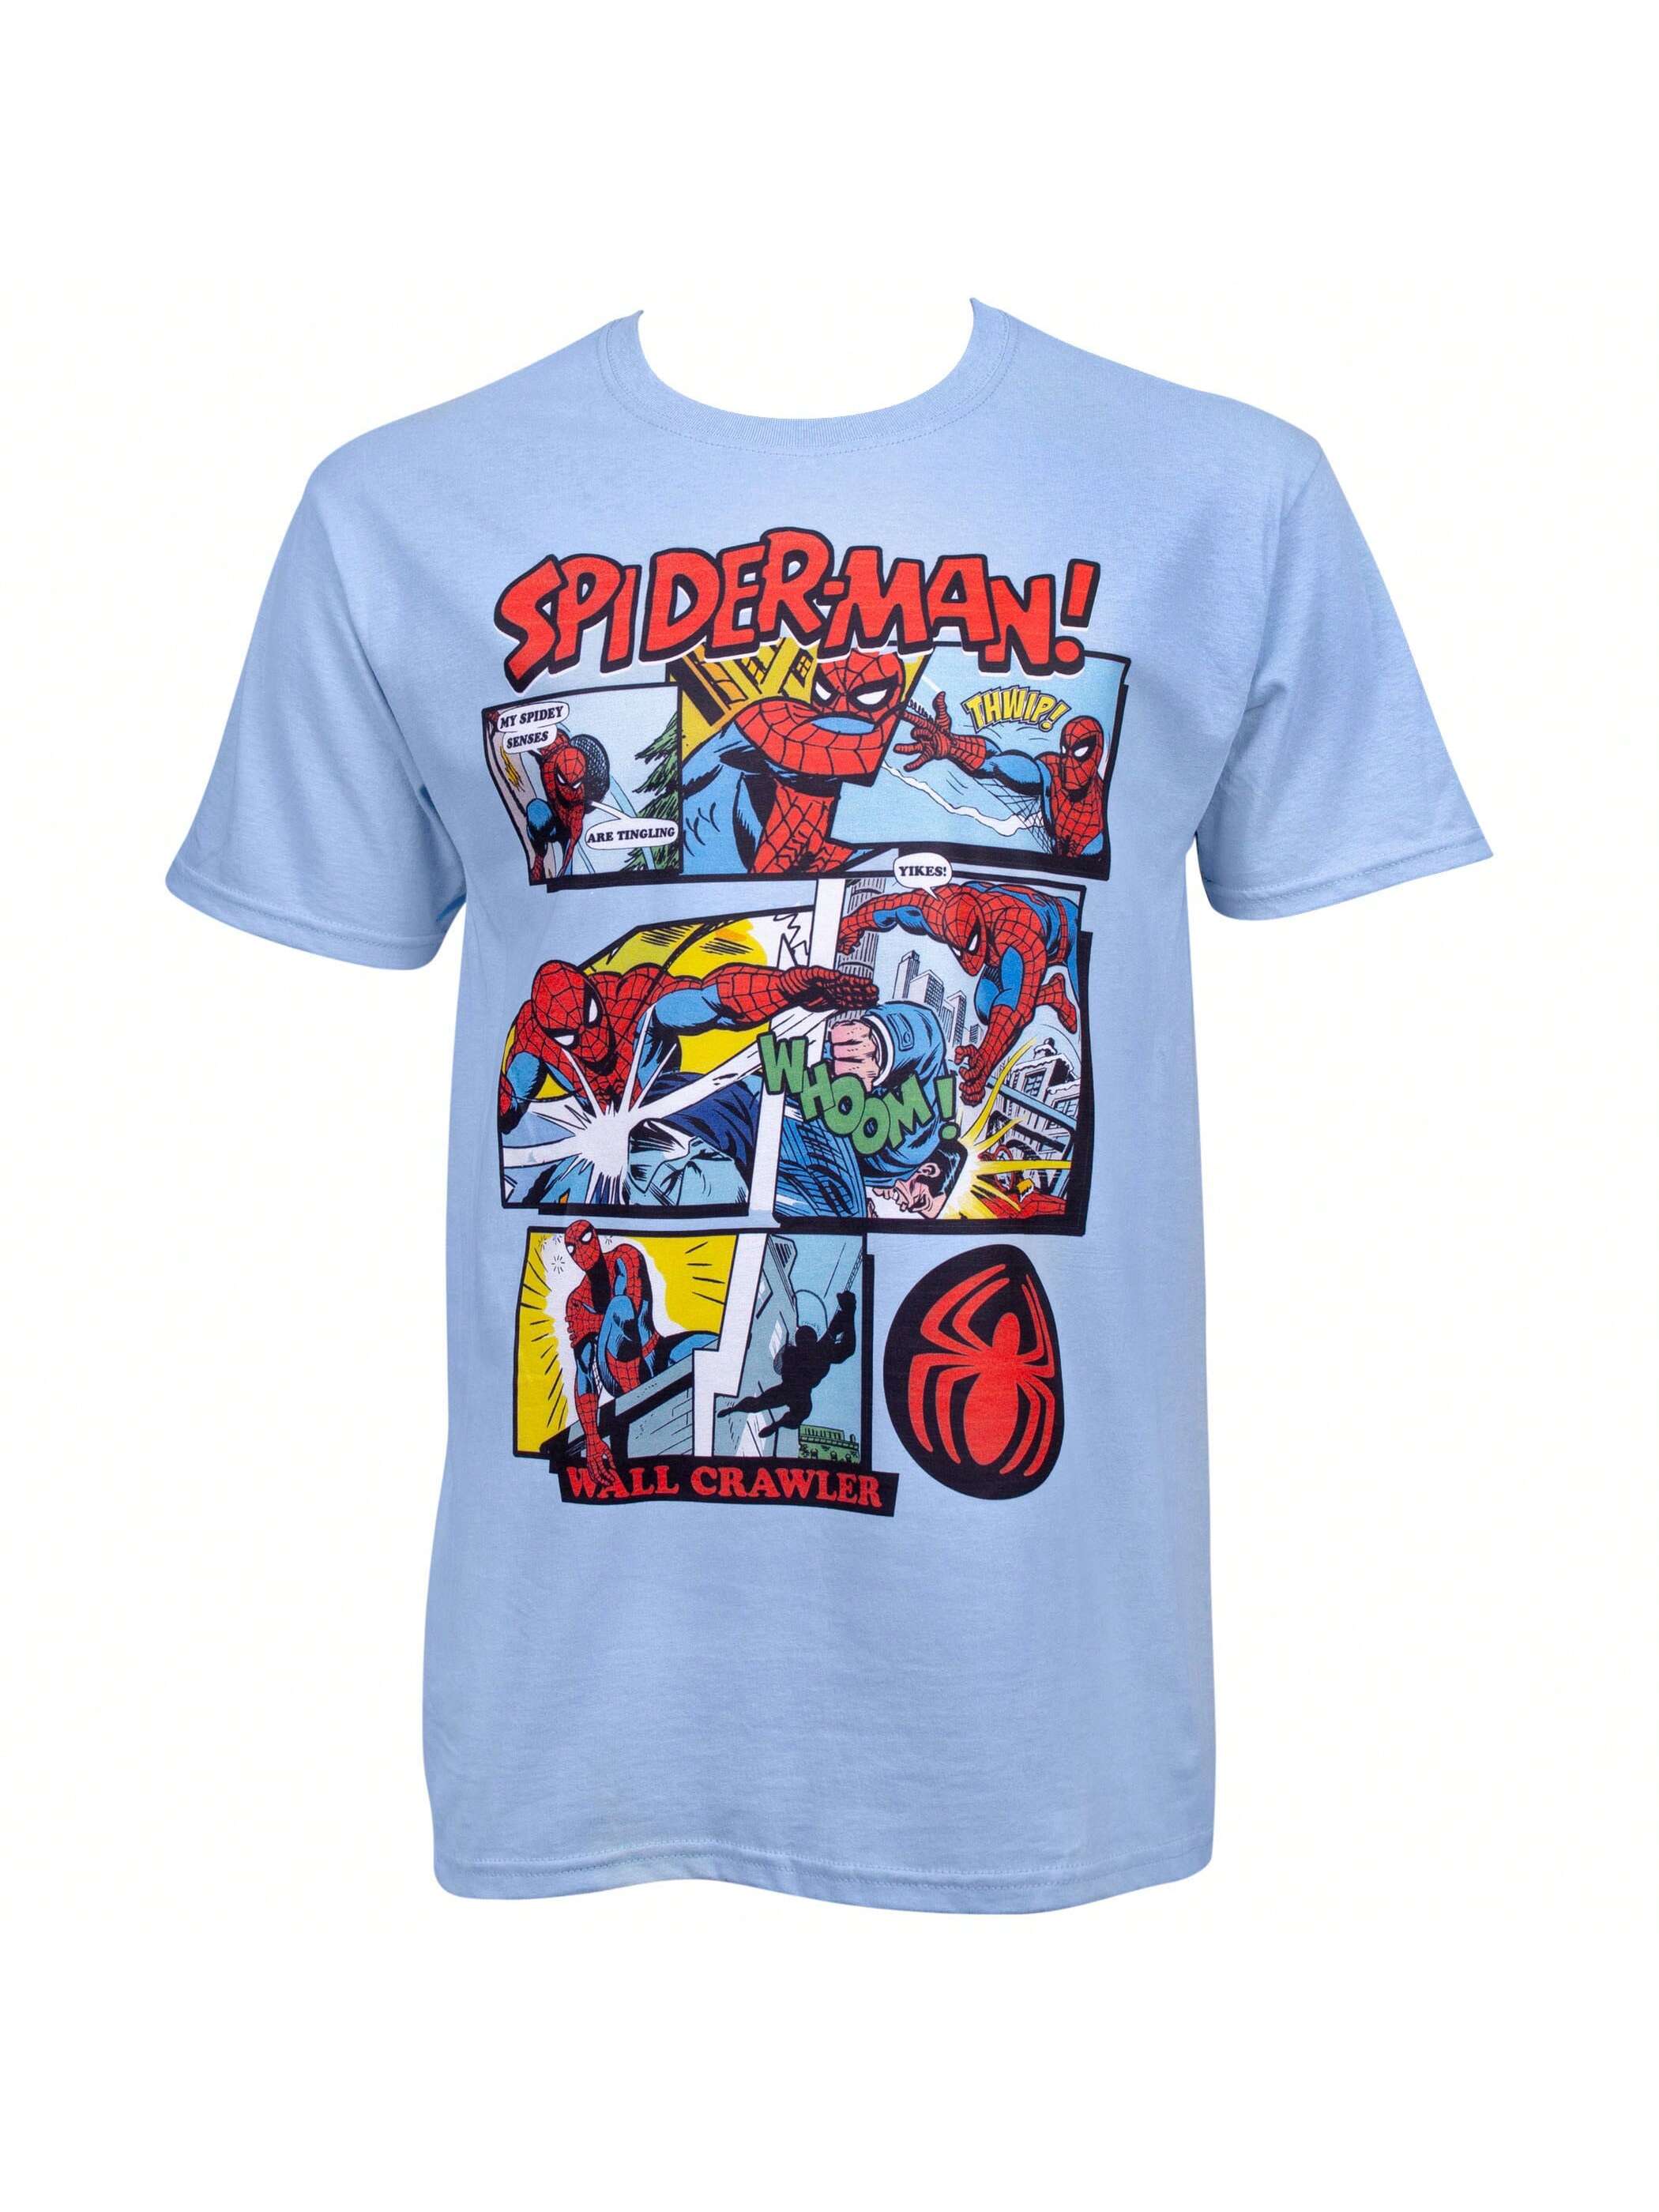 Синяя футболка с панелями комиксов Marvel Spider-Man, синий